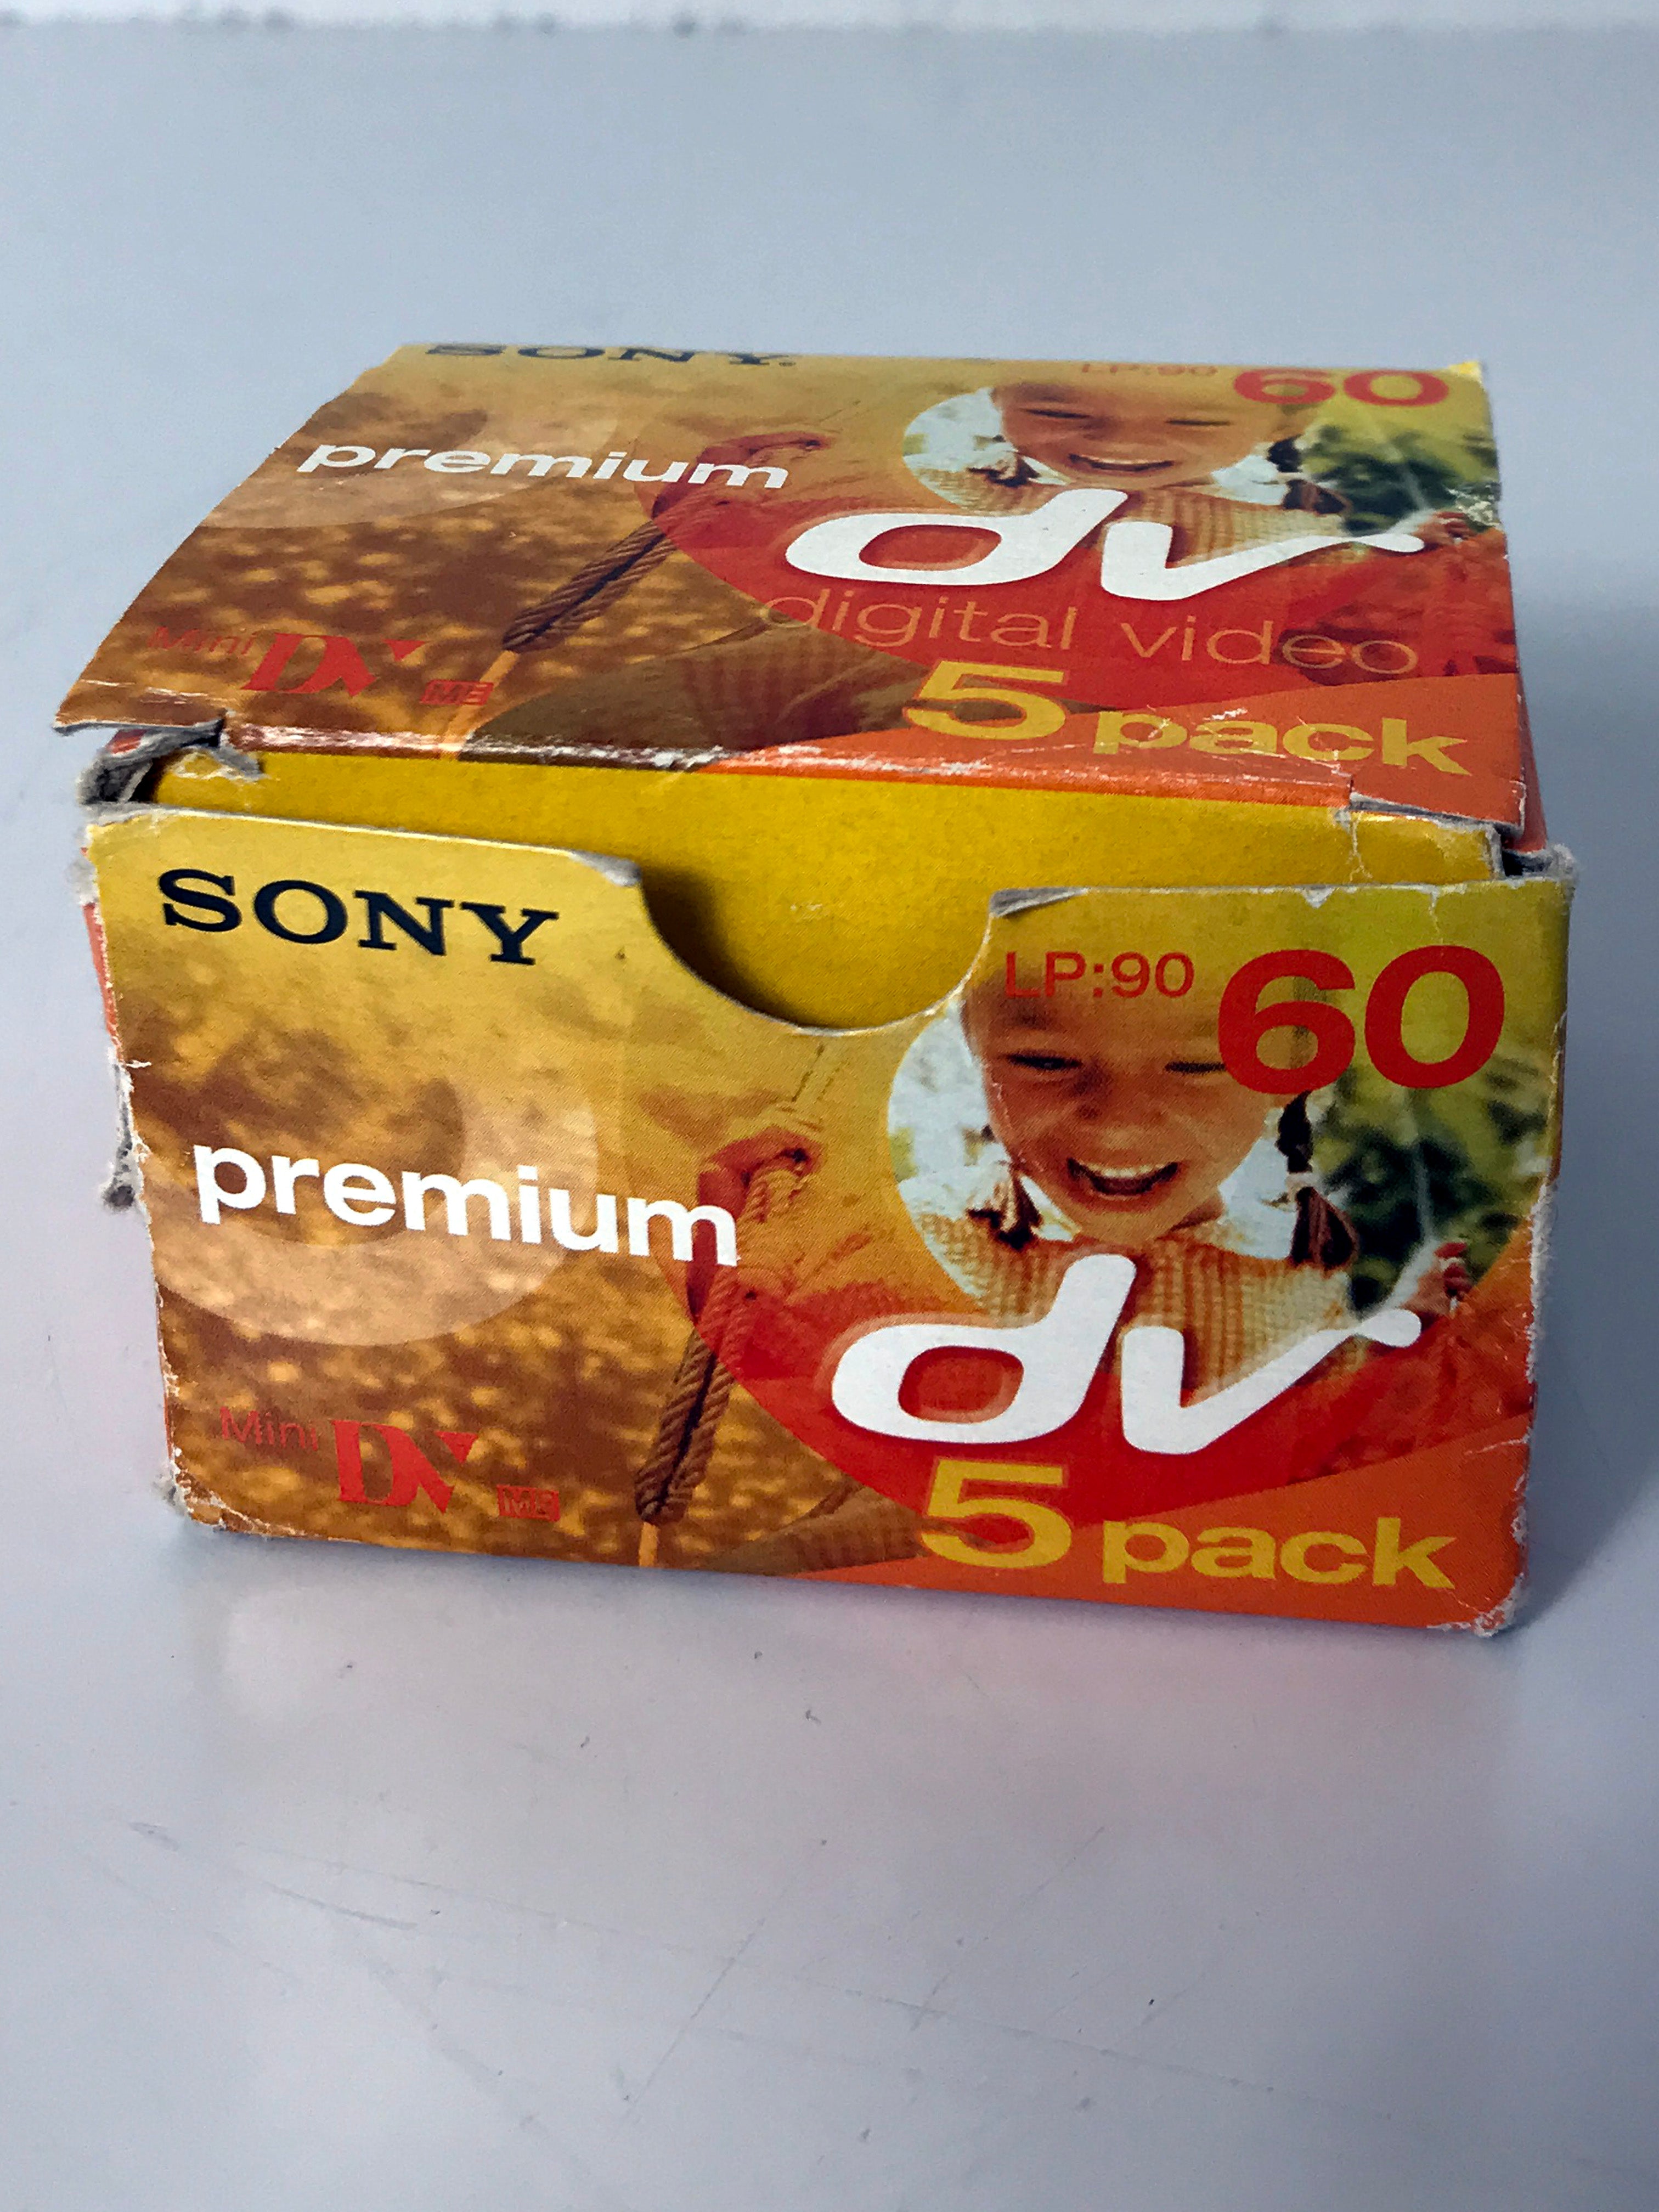 Sony Premium Mini DV 60 Minute Digital Video Cassette